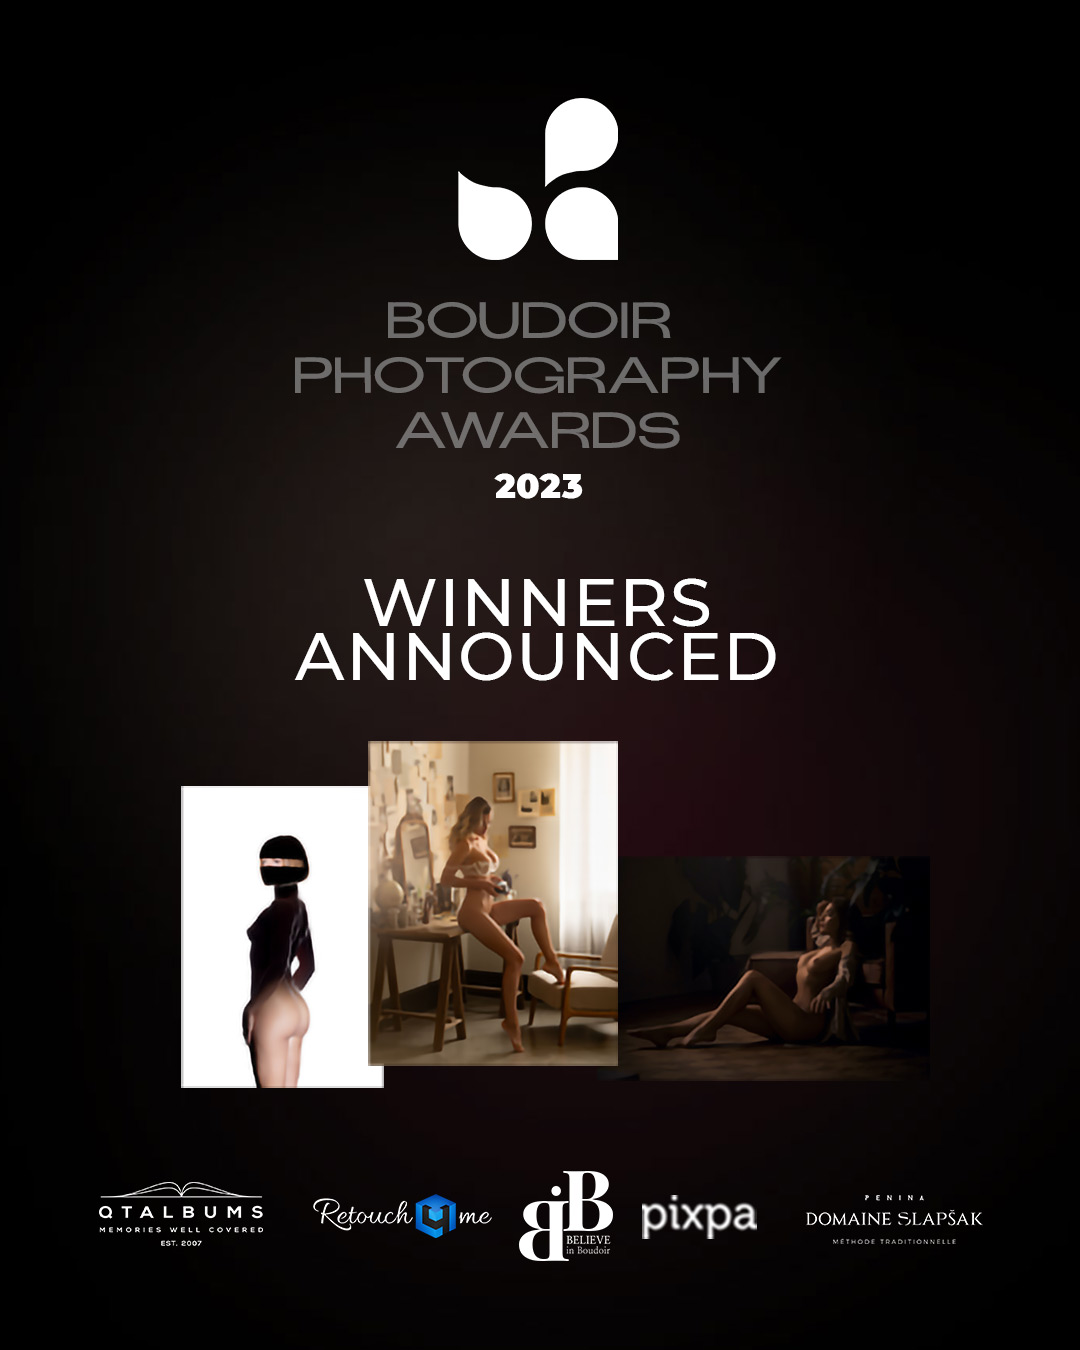 Boudoir Photography Awards 2023 Winners